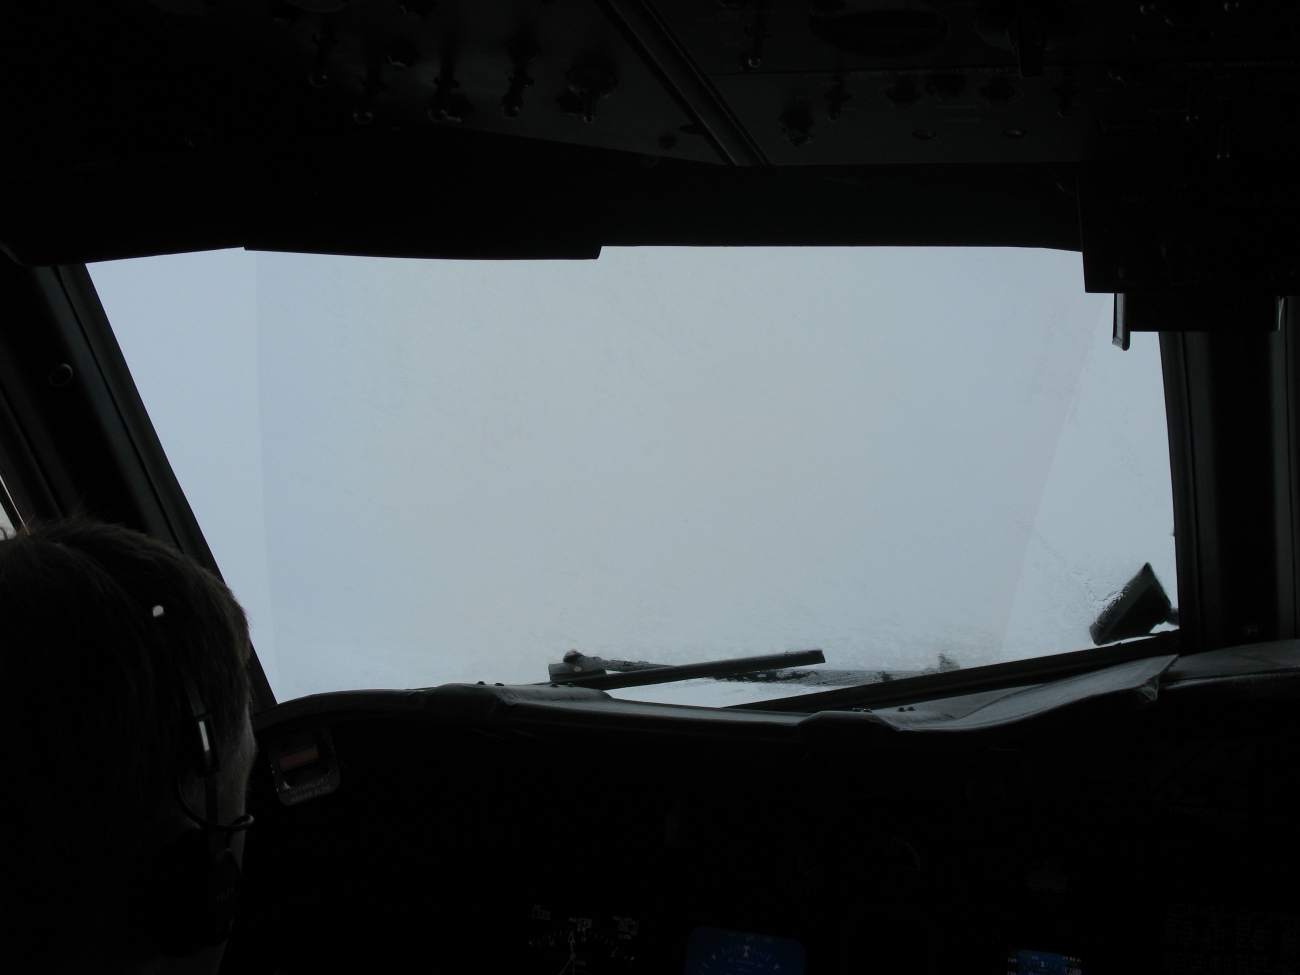 The pilot's view while traversing cumulonimbus clouds